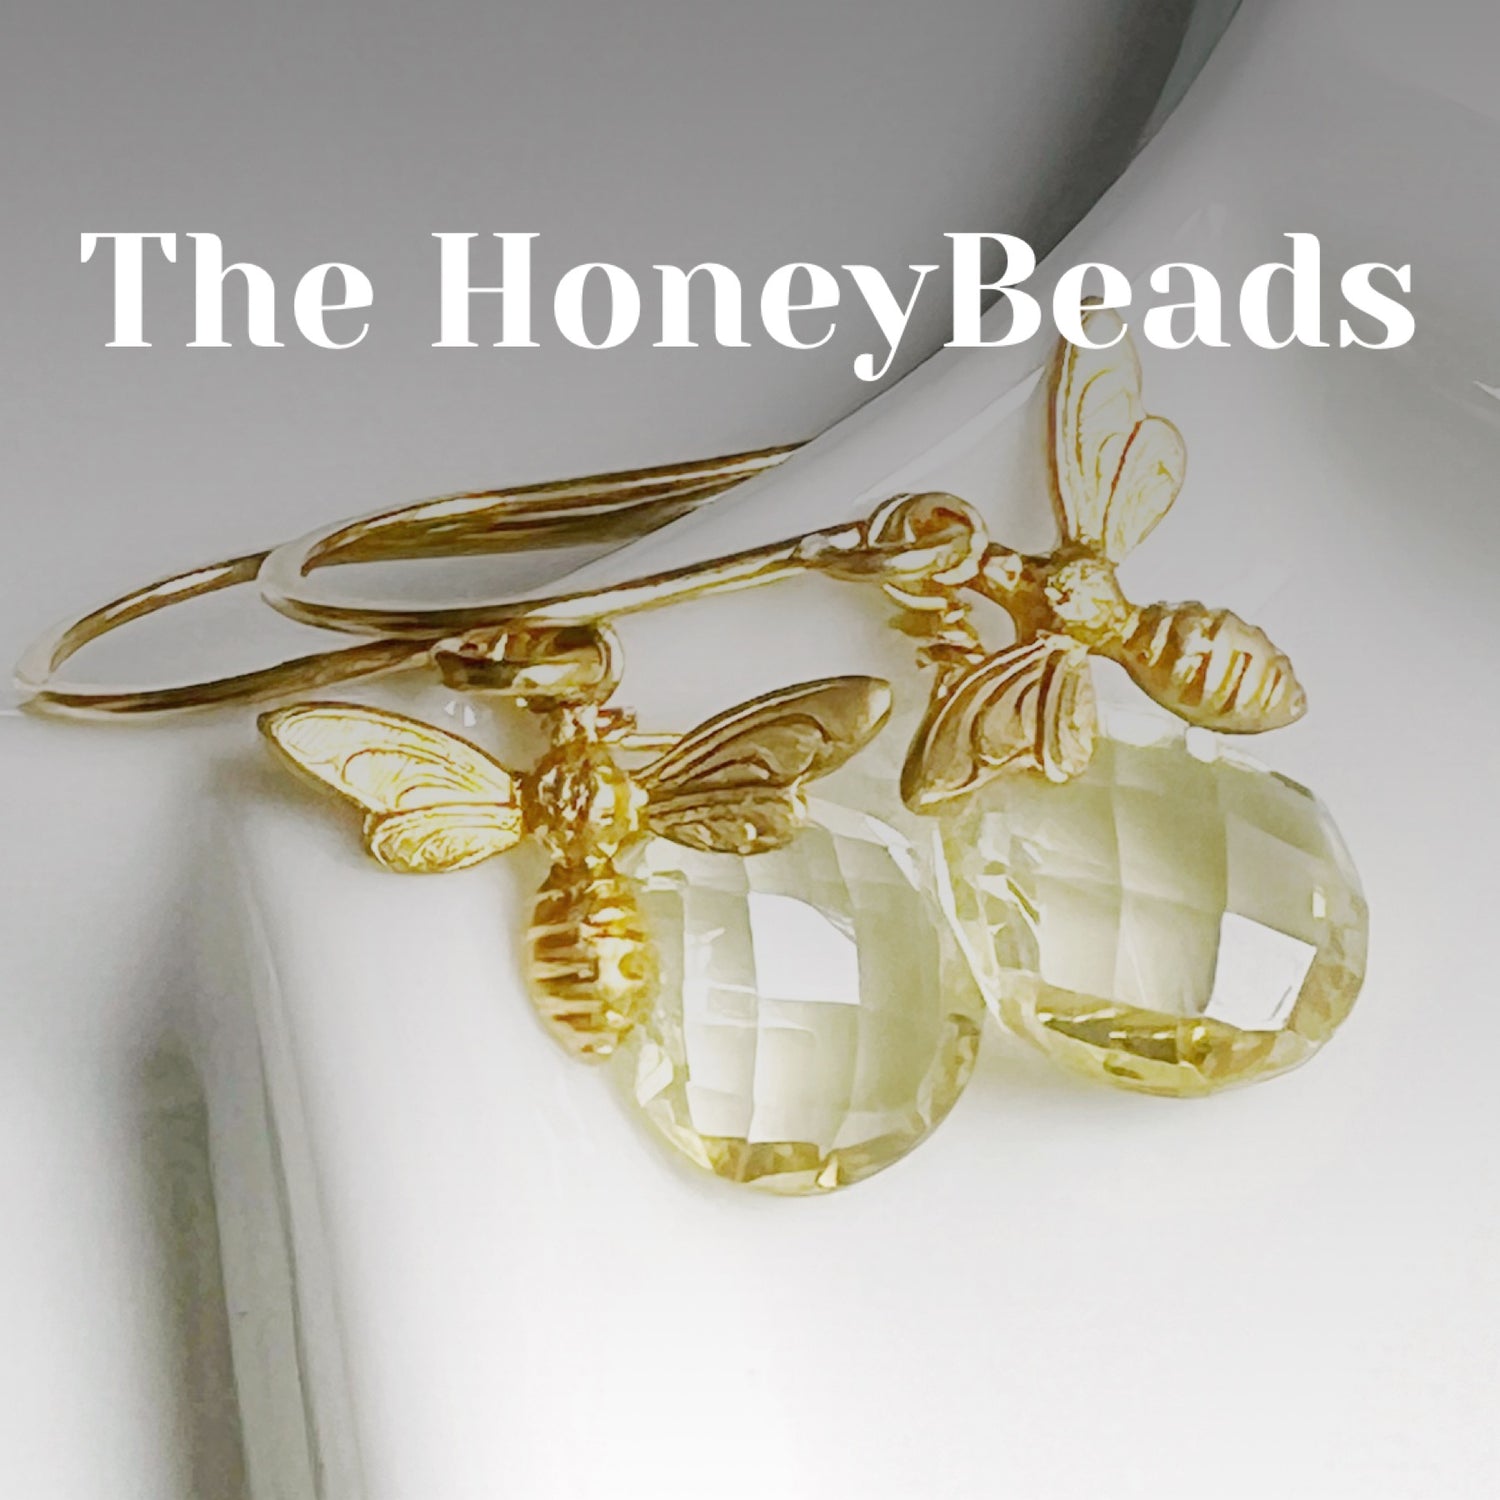 HoneyBead